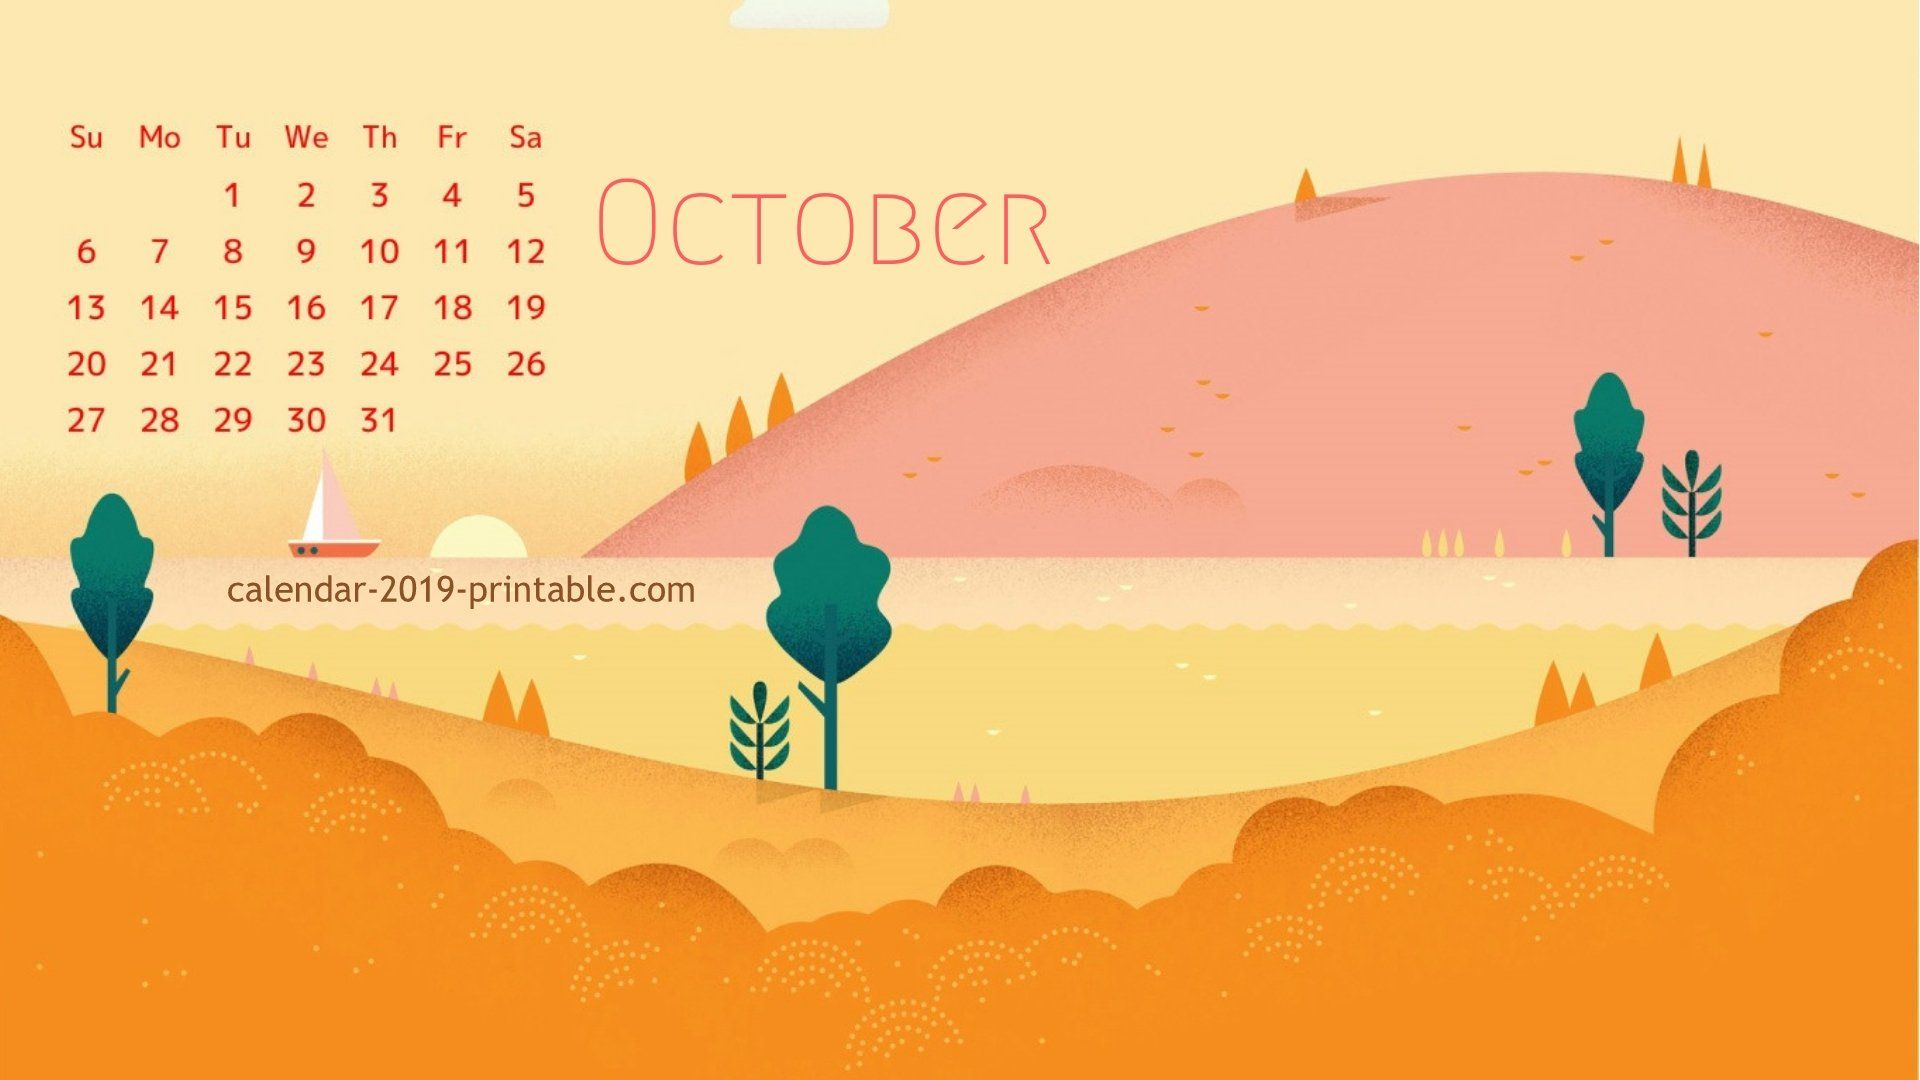 October Calendar Wallpaper In